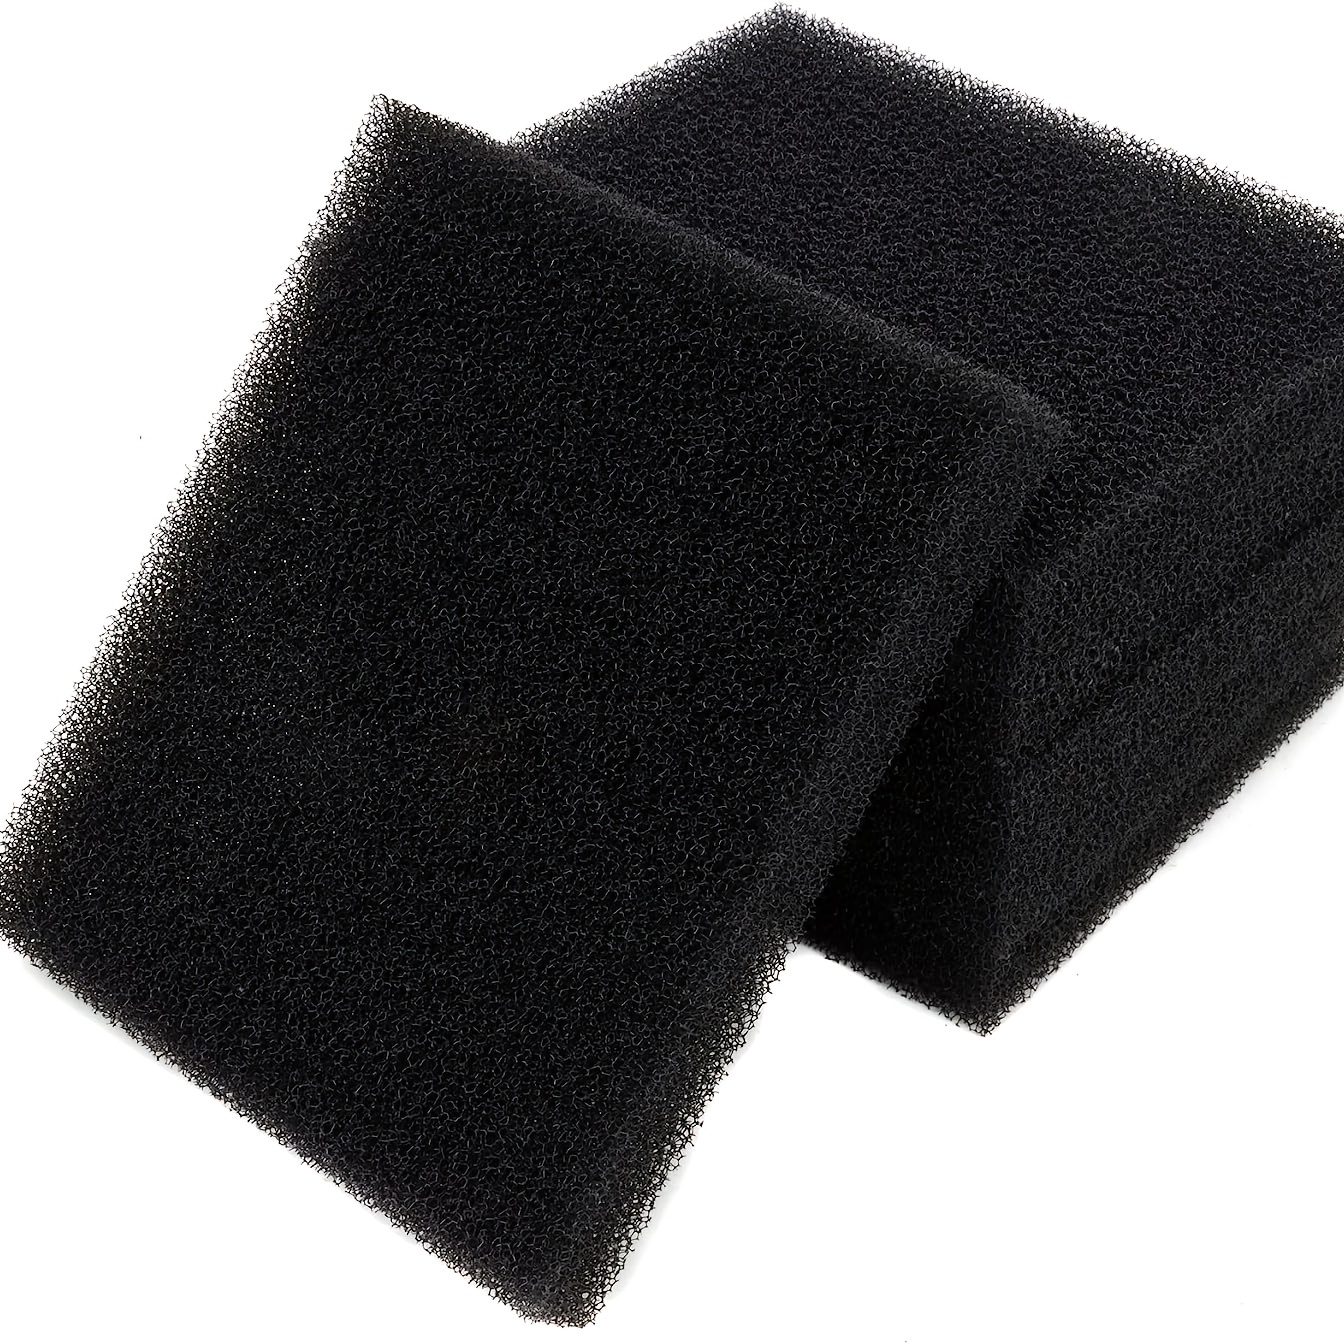 Coarse Filter Sponge Dust Filter Foam Activated Carbon Filter